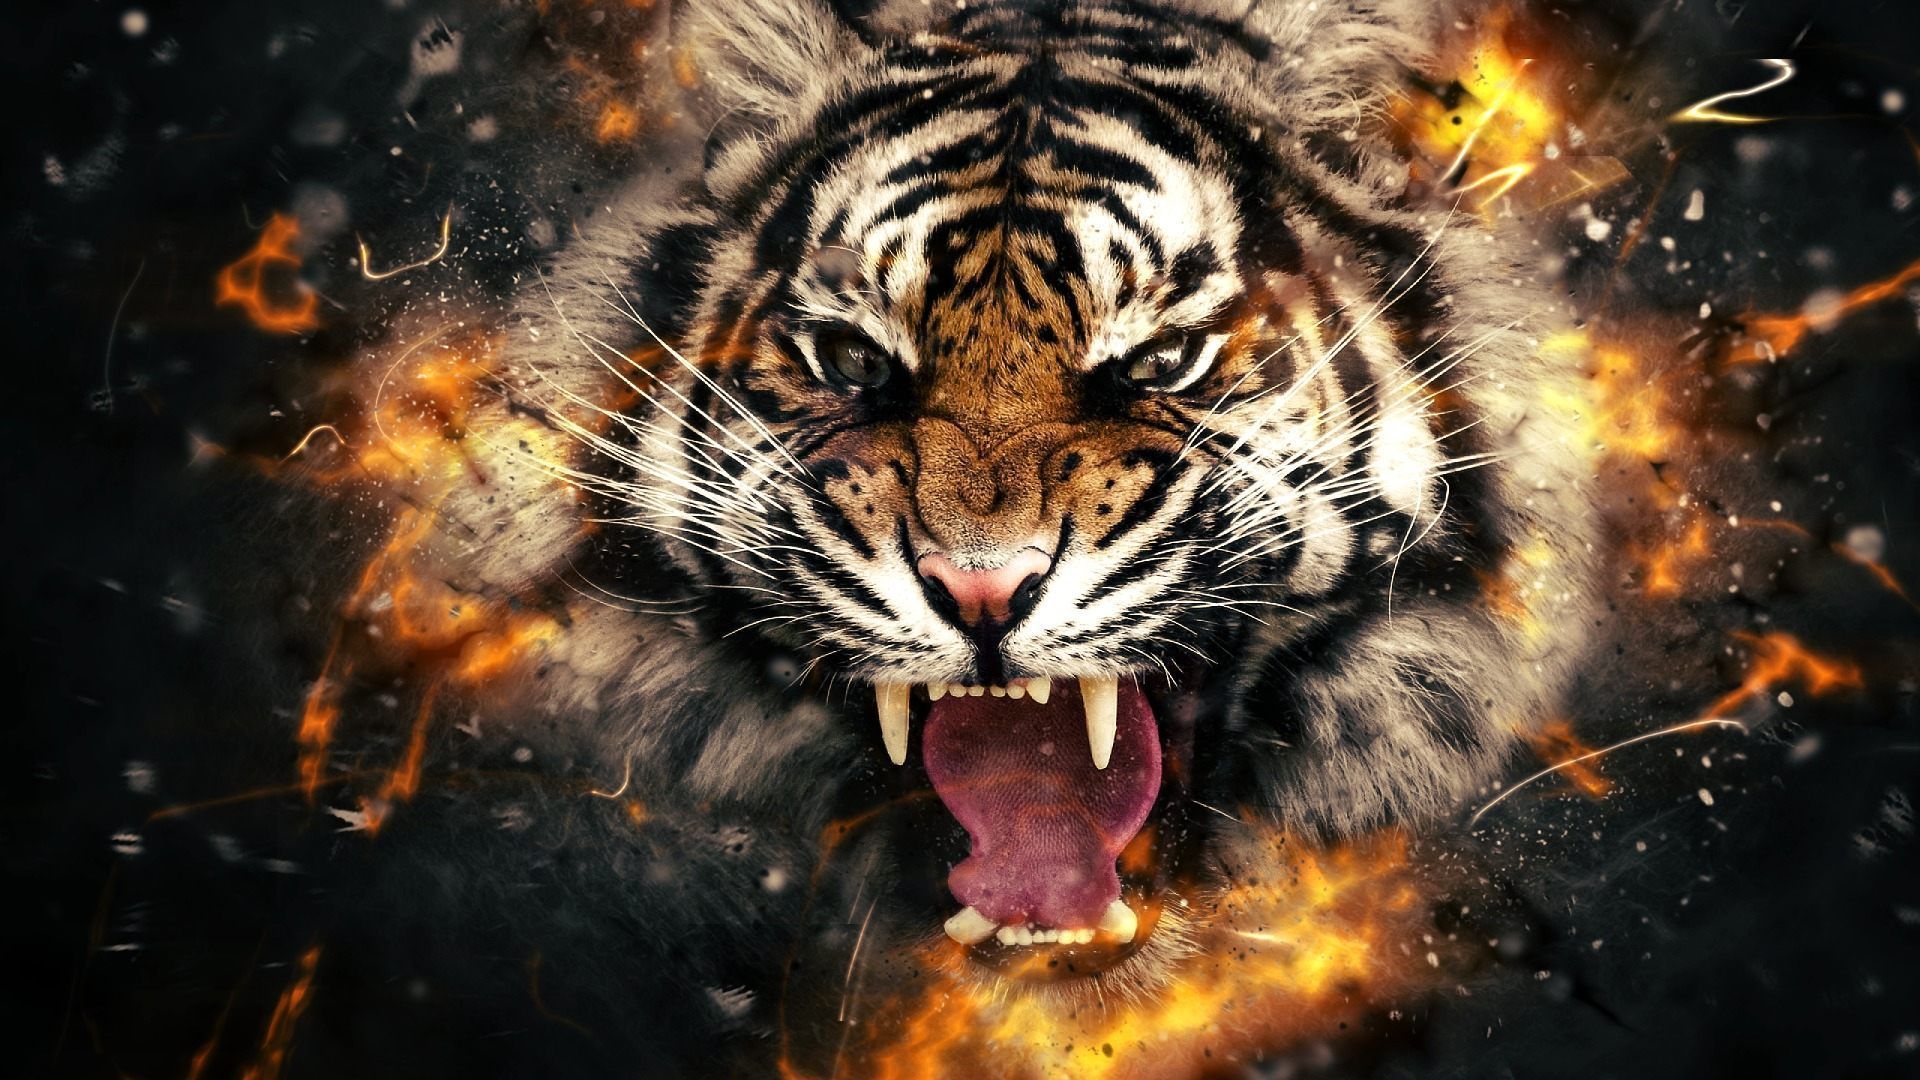 Tiger Head Wallpaper HD Download For Desktop Of Tiger Face